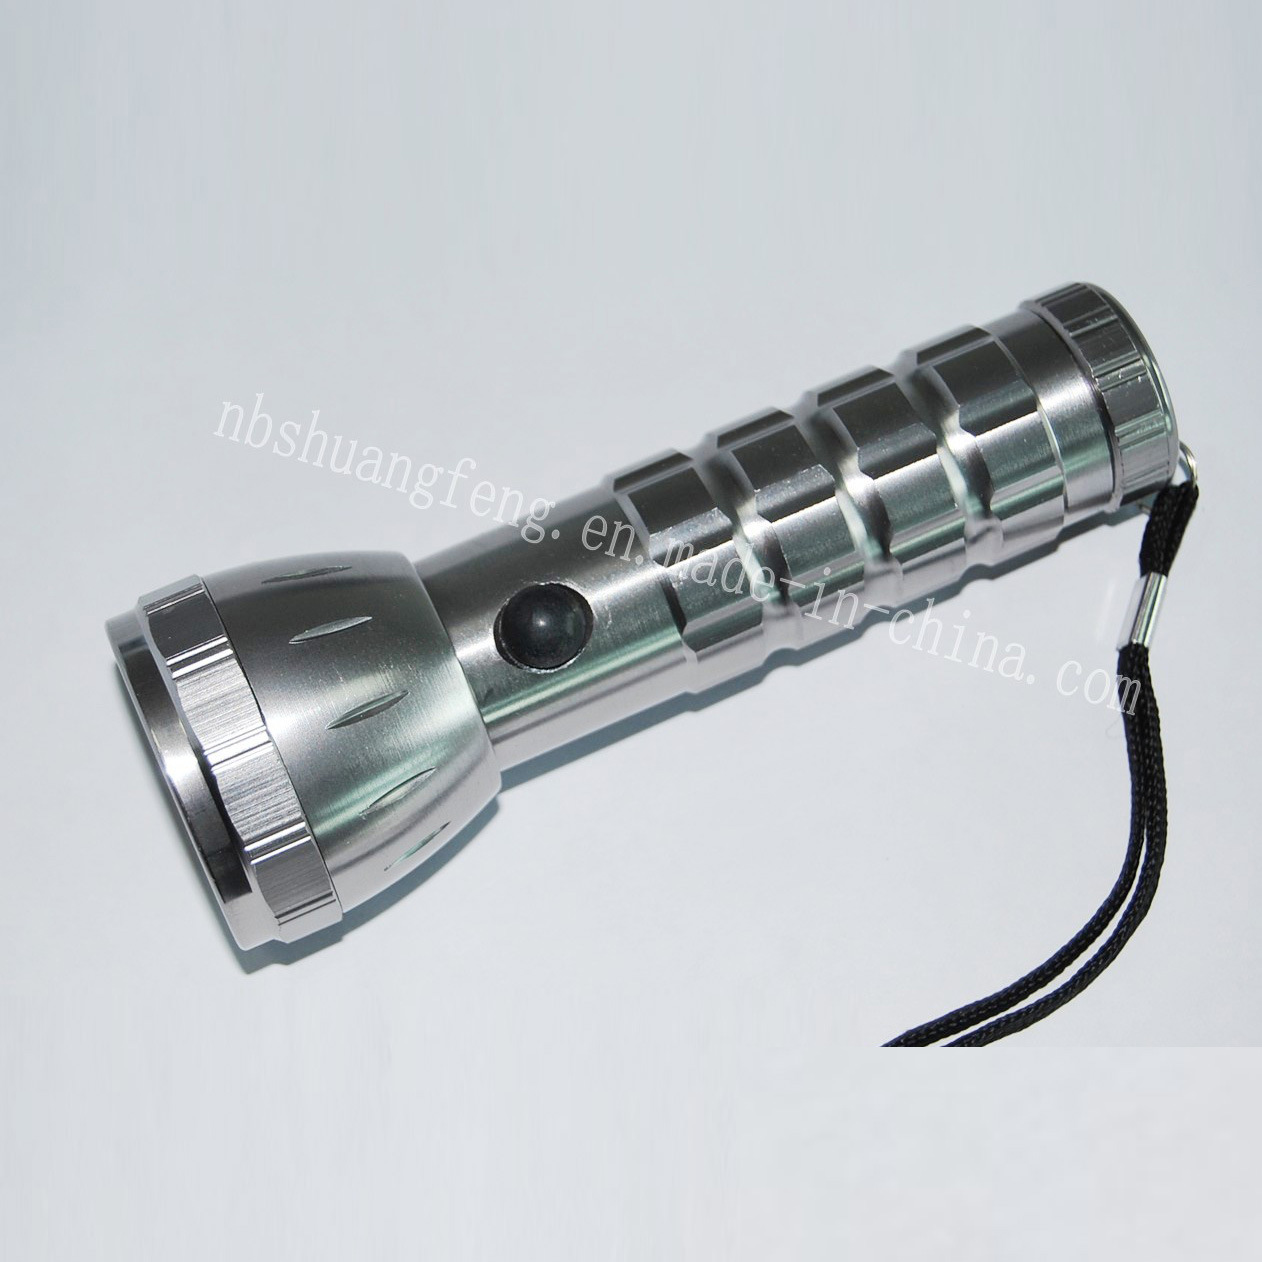 Aluminium 28 LED Flashlight (SF-28C)